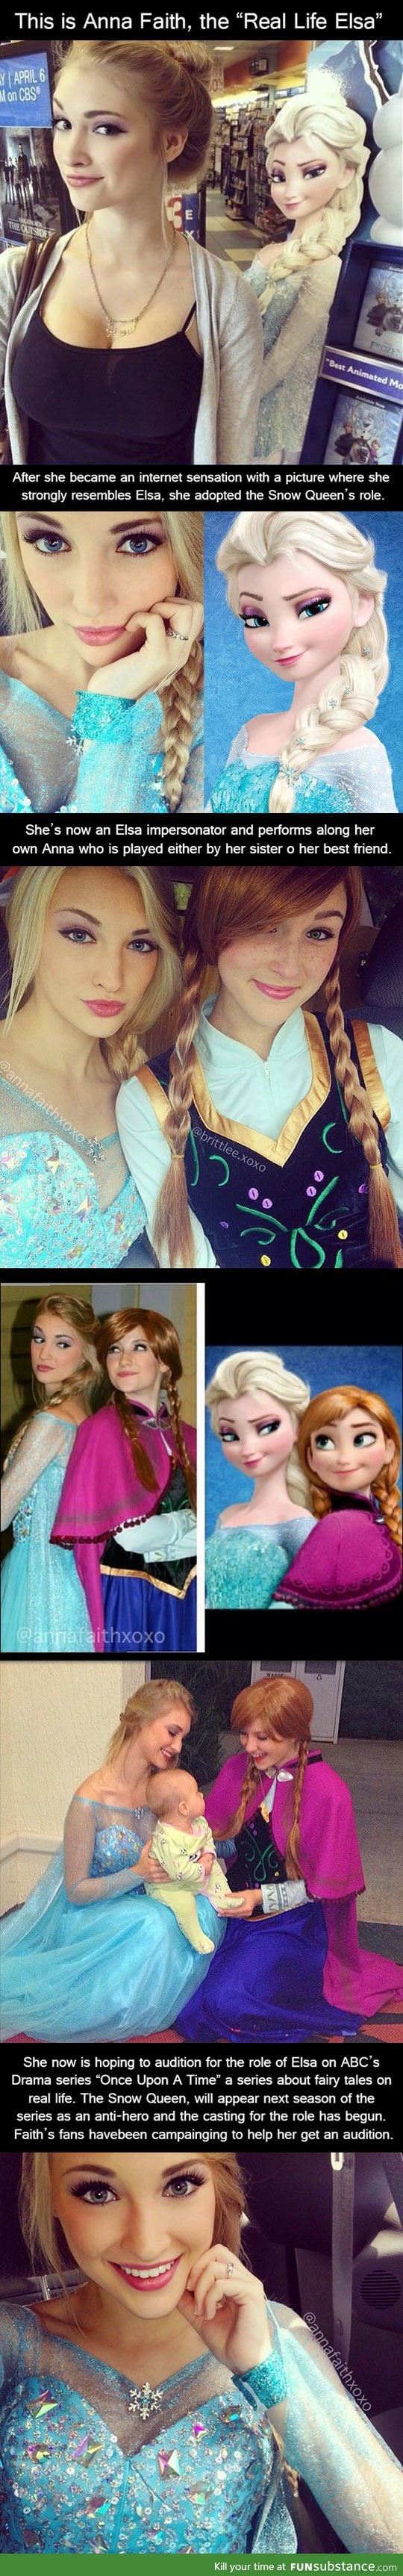 Meet the real life version of Elsa